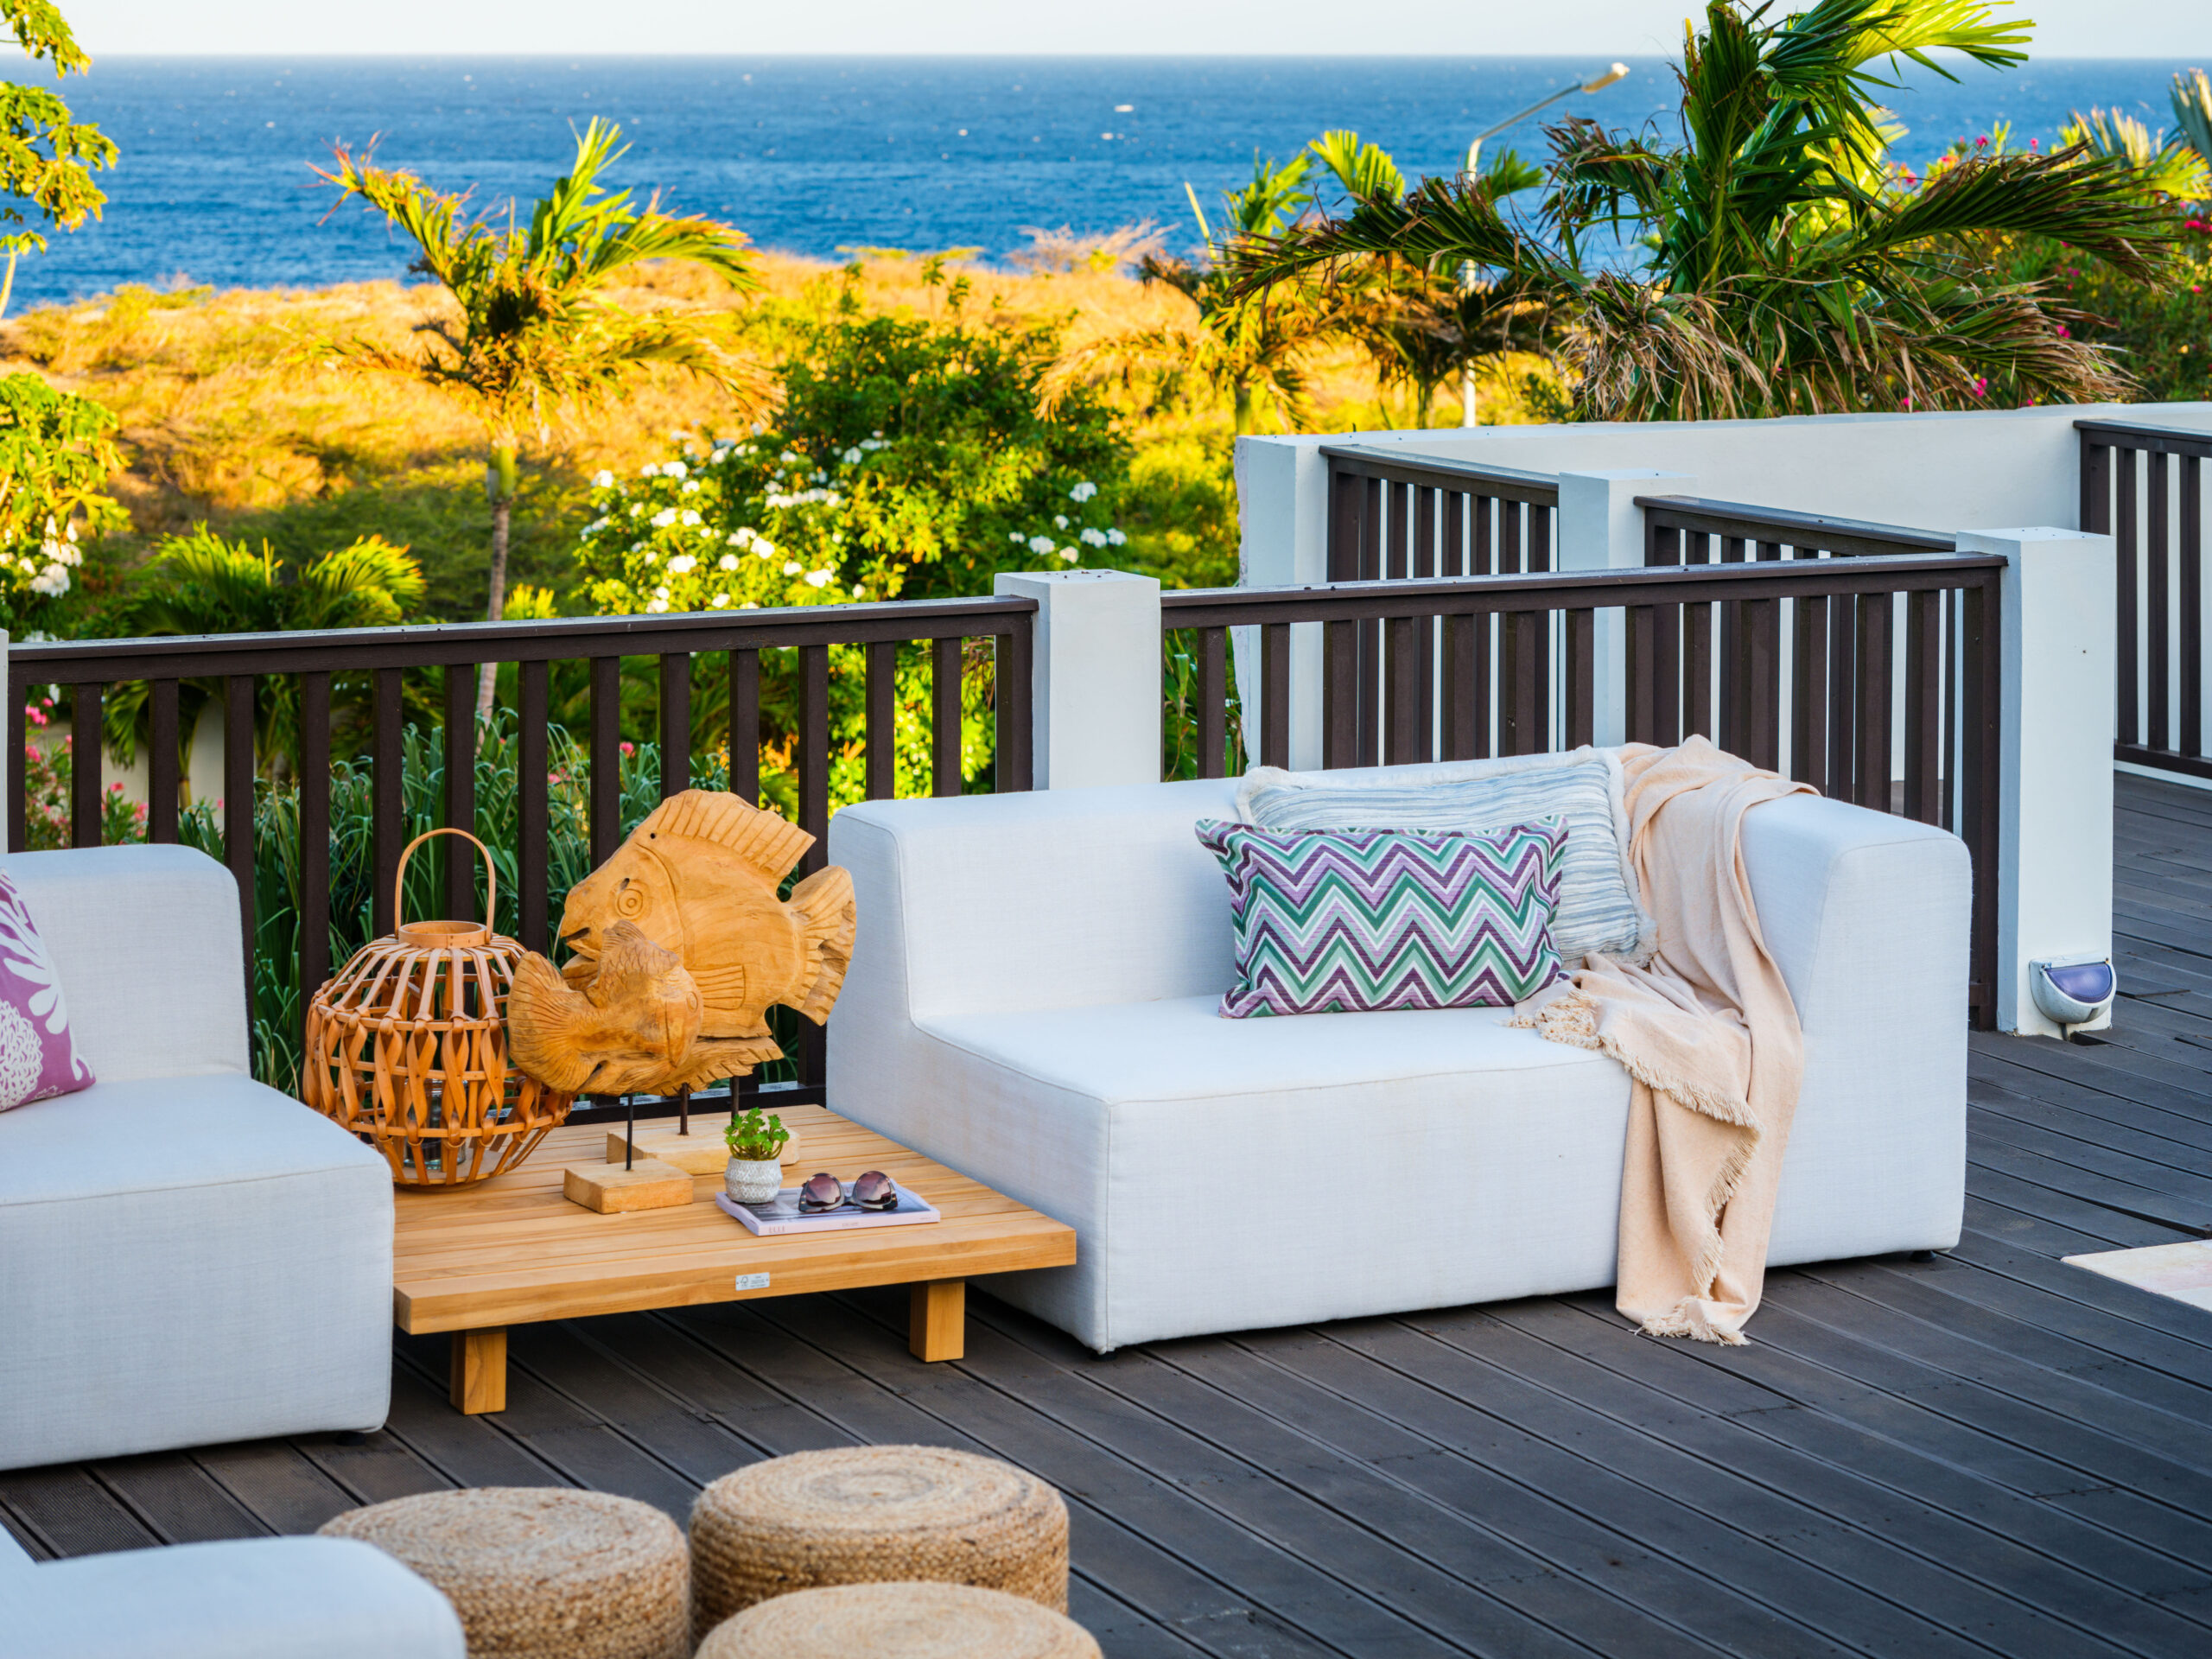 Luxury outdoor lounge set